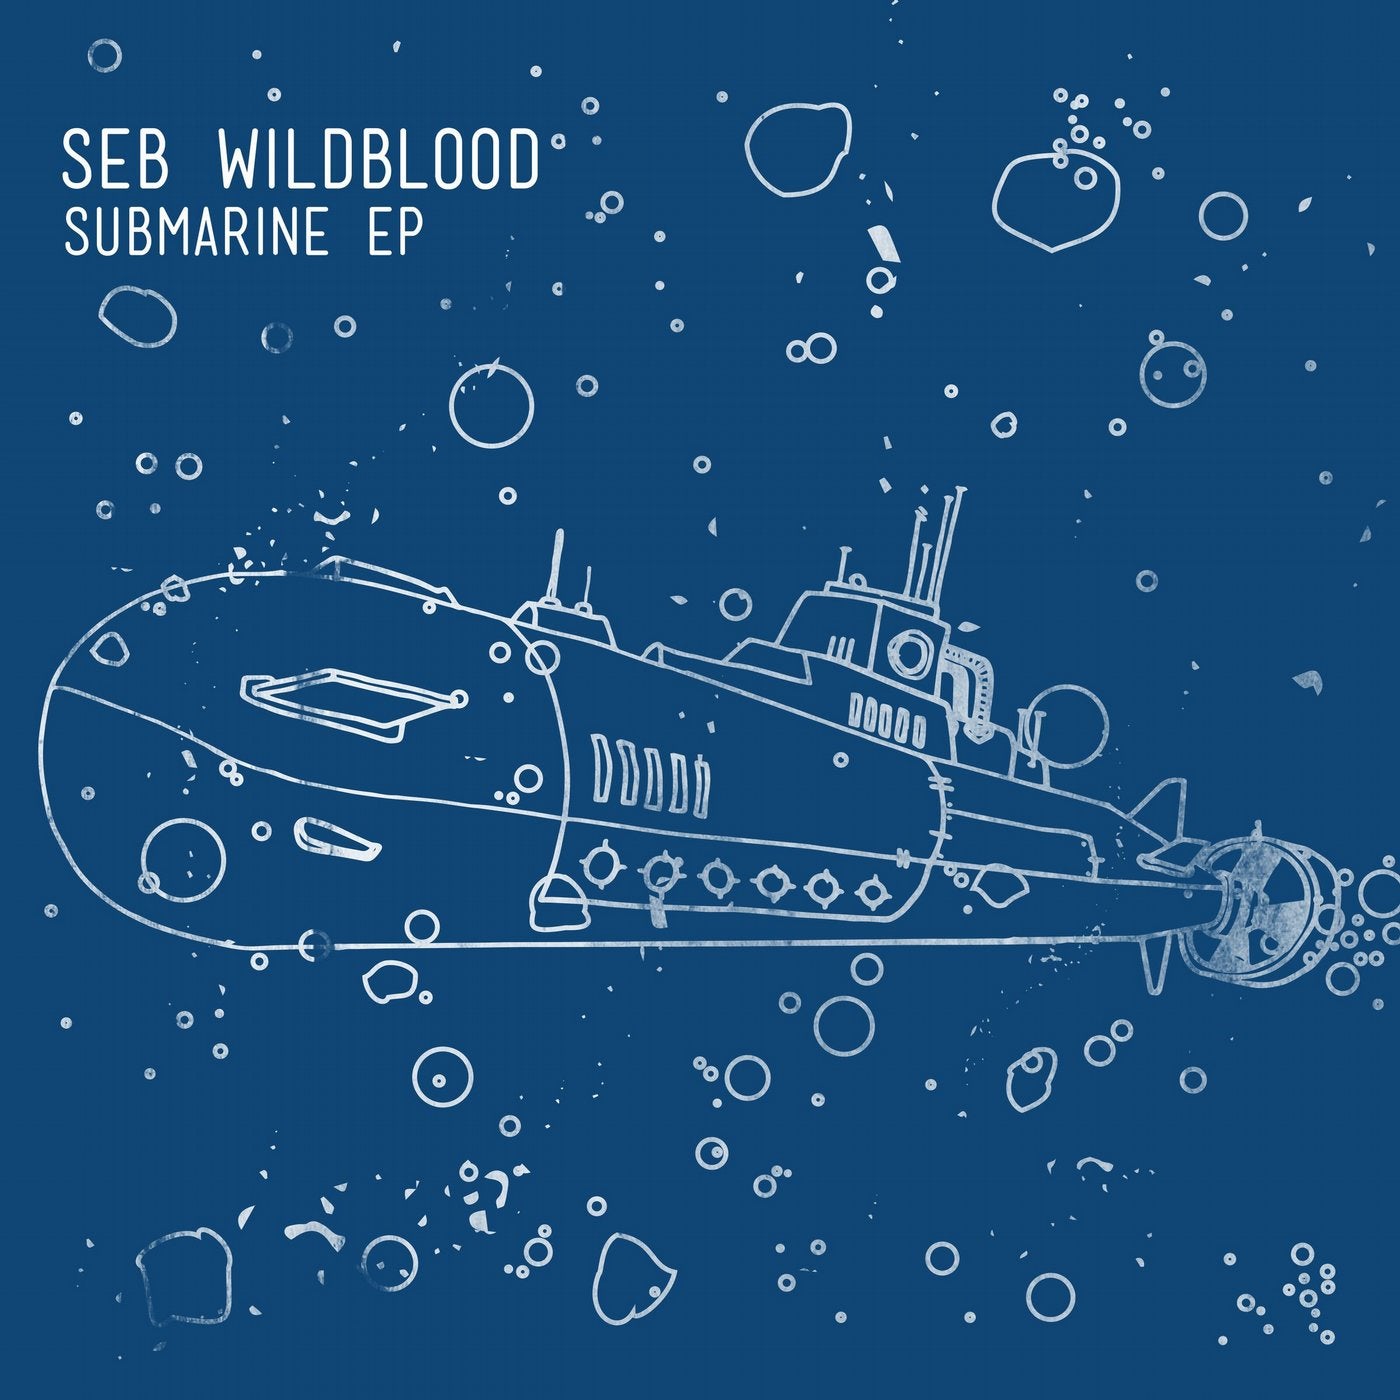 Submarine EP